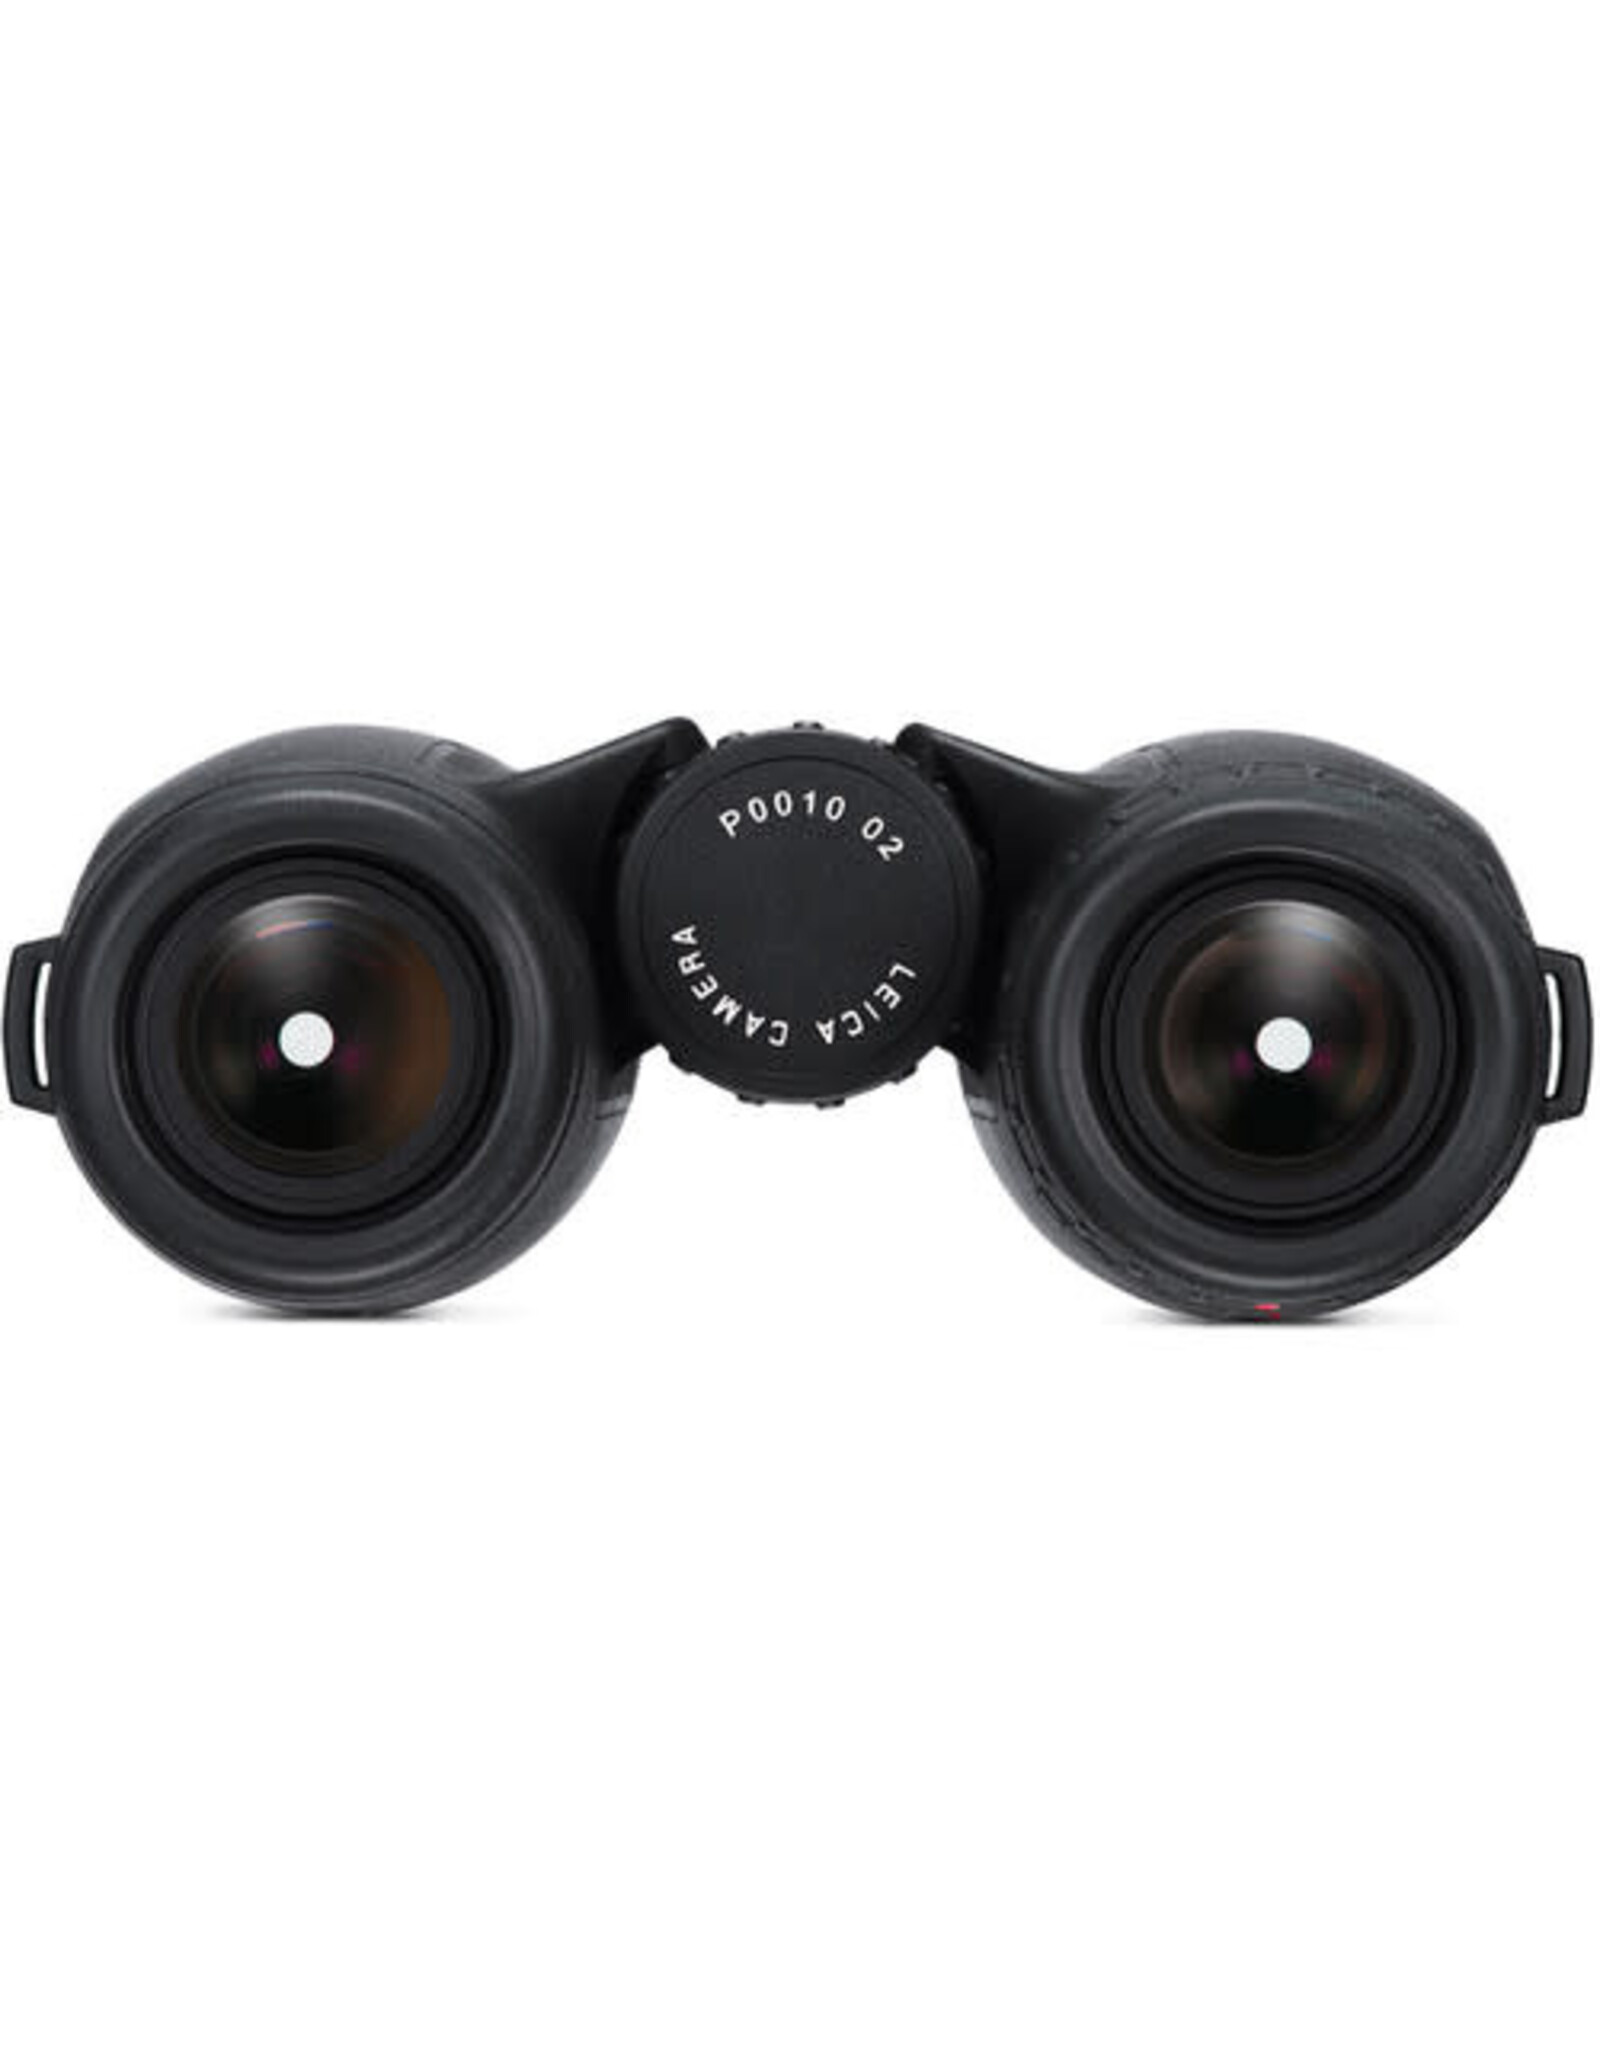 Leica 8x42 Trinovid HD Binoculars  - 40318